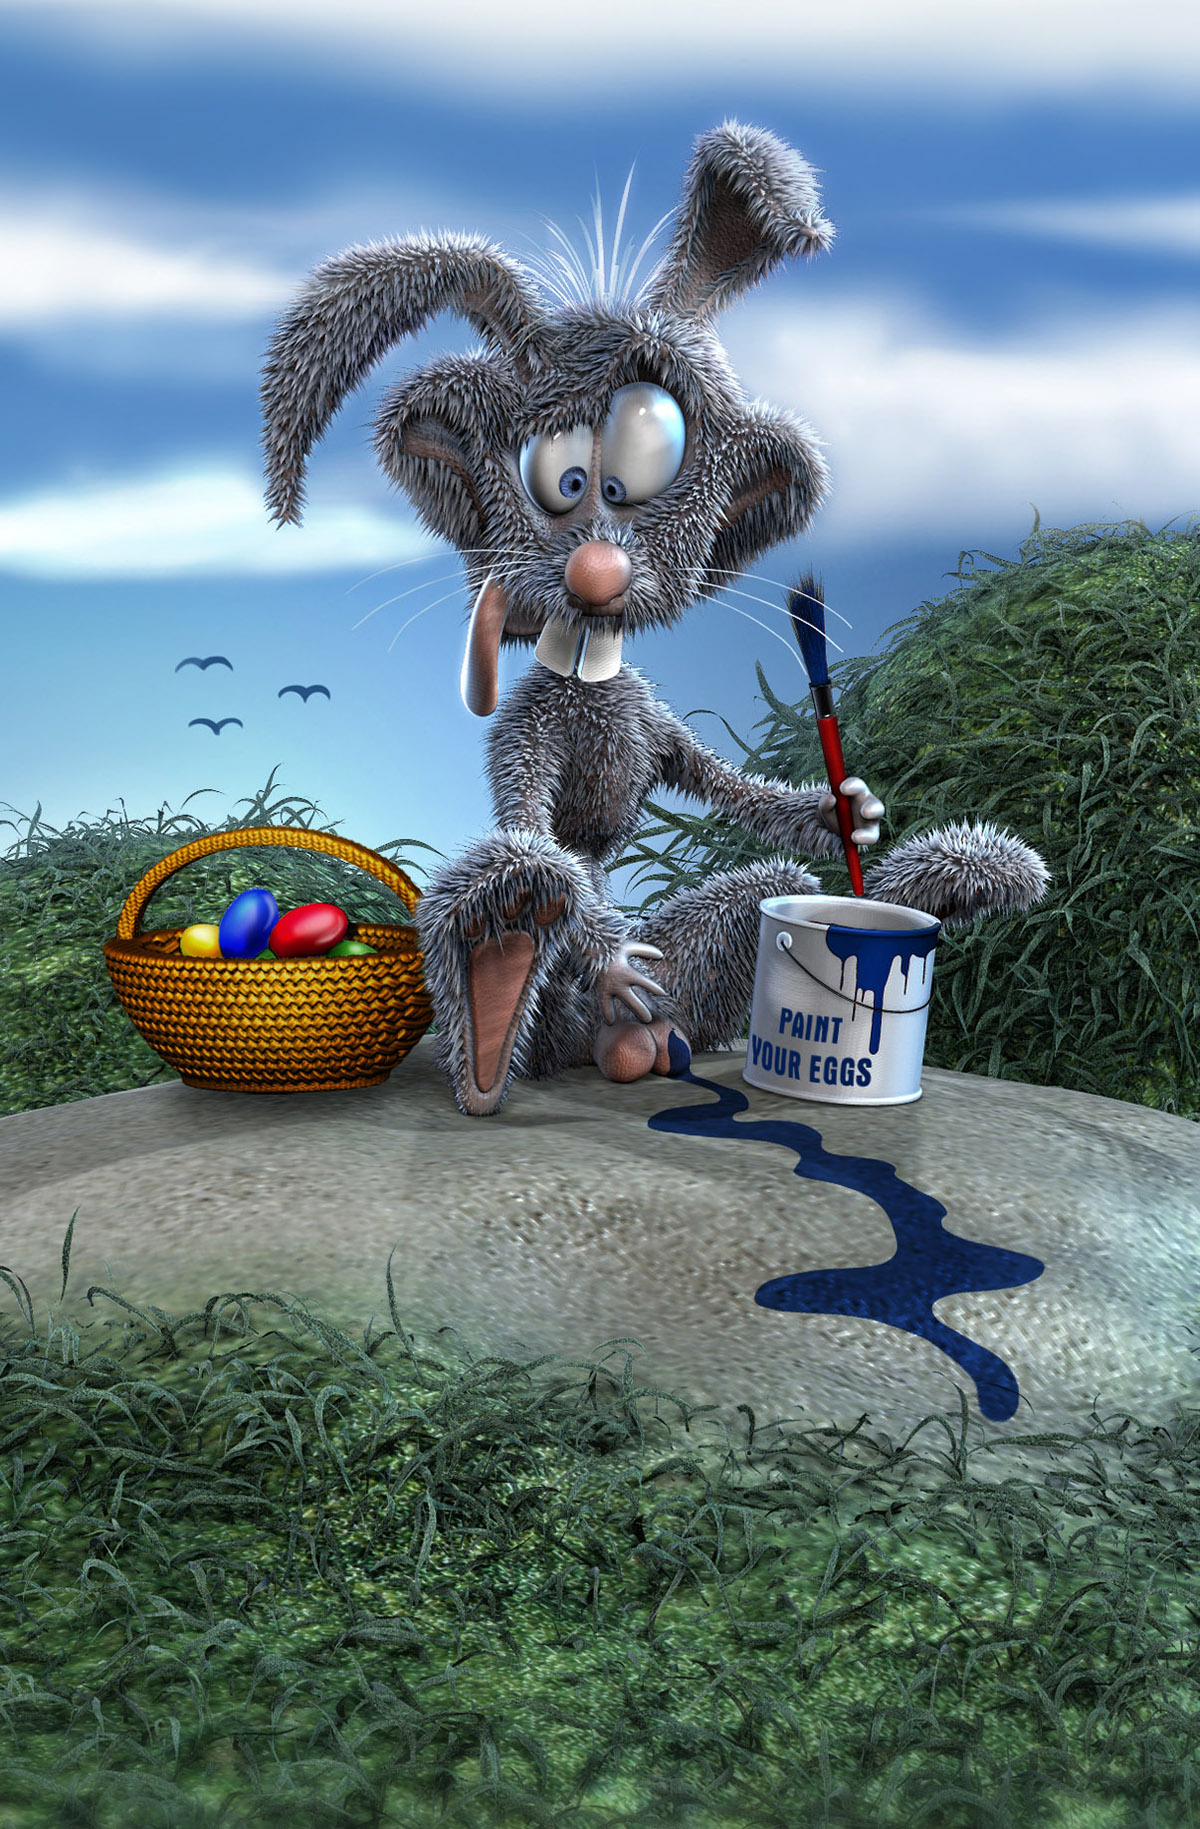 funny  bunny  rabbit  easter  eggs  paint  Balls  3d  deviantom  tomislav  zvonaric  happy cool  paintbrush  blue  bucket  joke